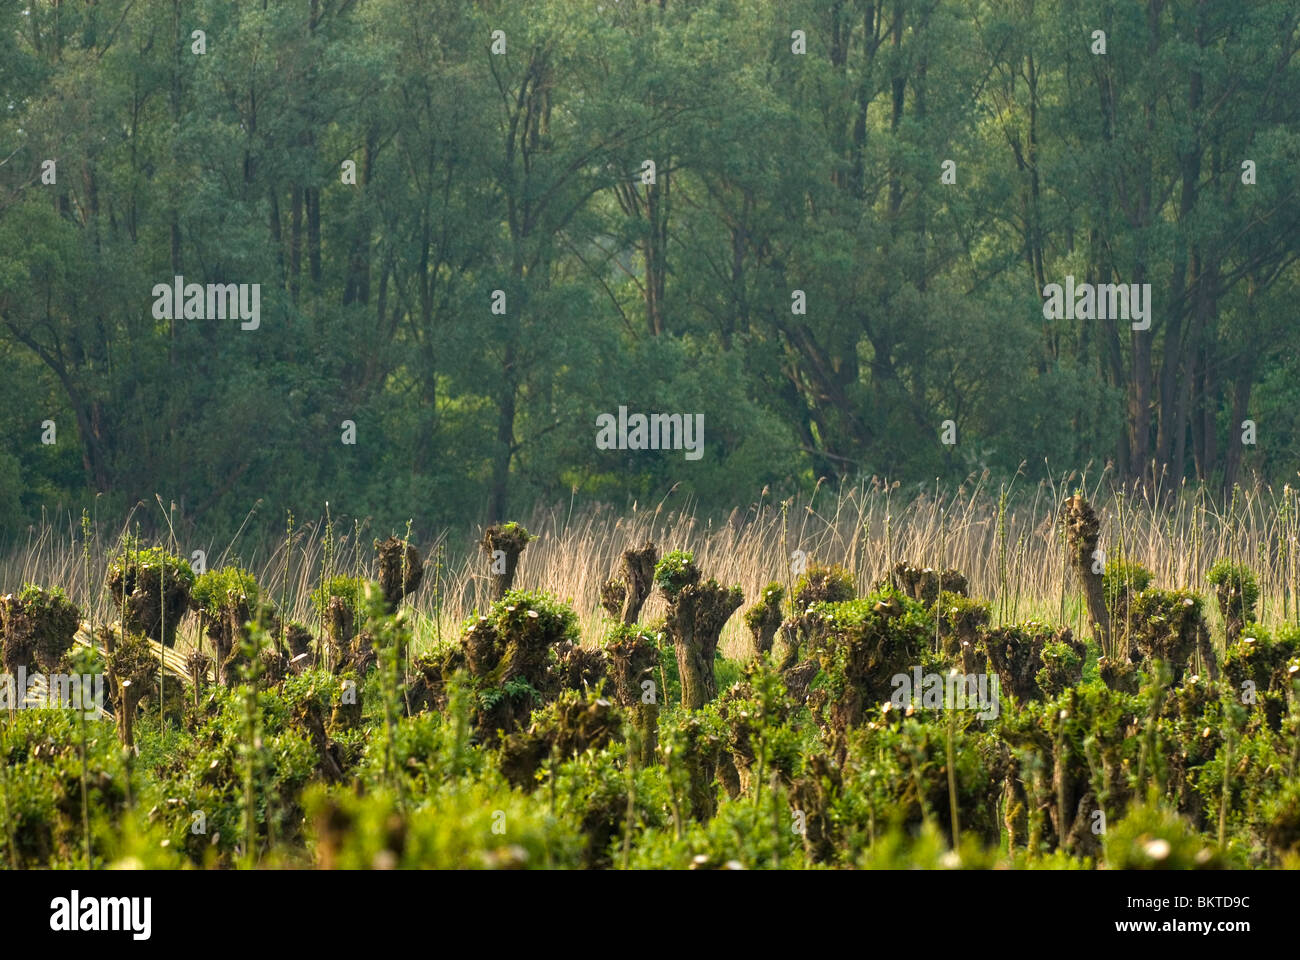 Griendcultuur En Wilgenvloedbos Op de Pannekoek in Nationaalpark de Biesbosch; Willowcoppice und Weide Wald im Biesbosch Nationalpark Stockfoto